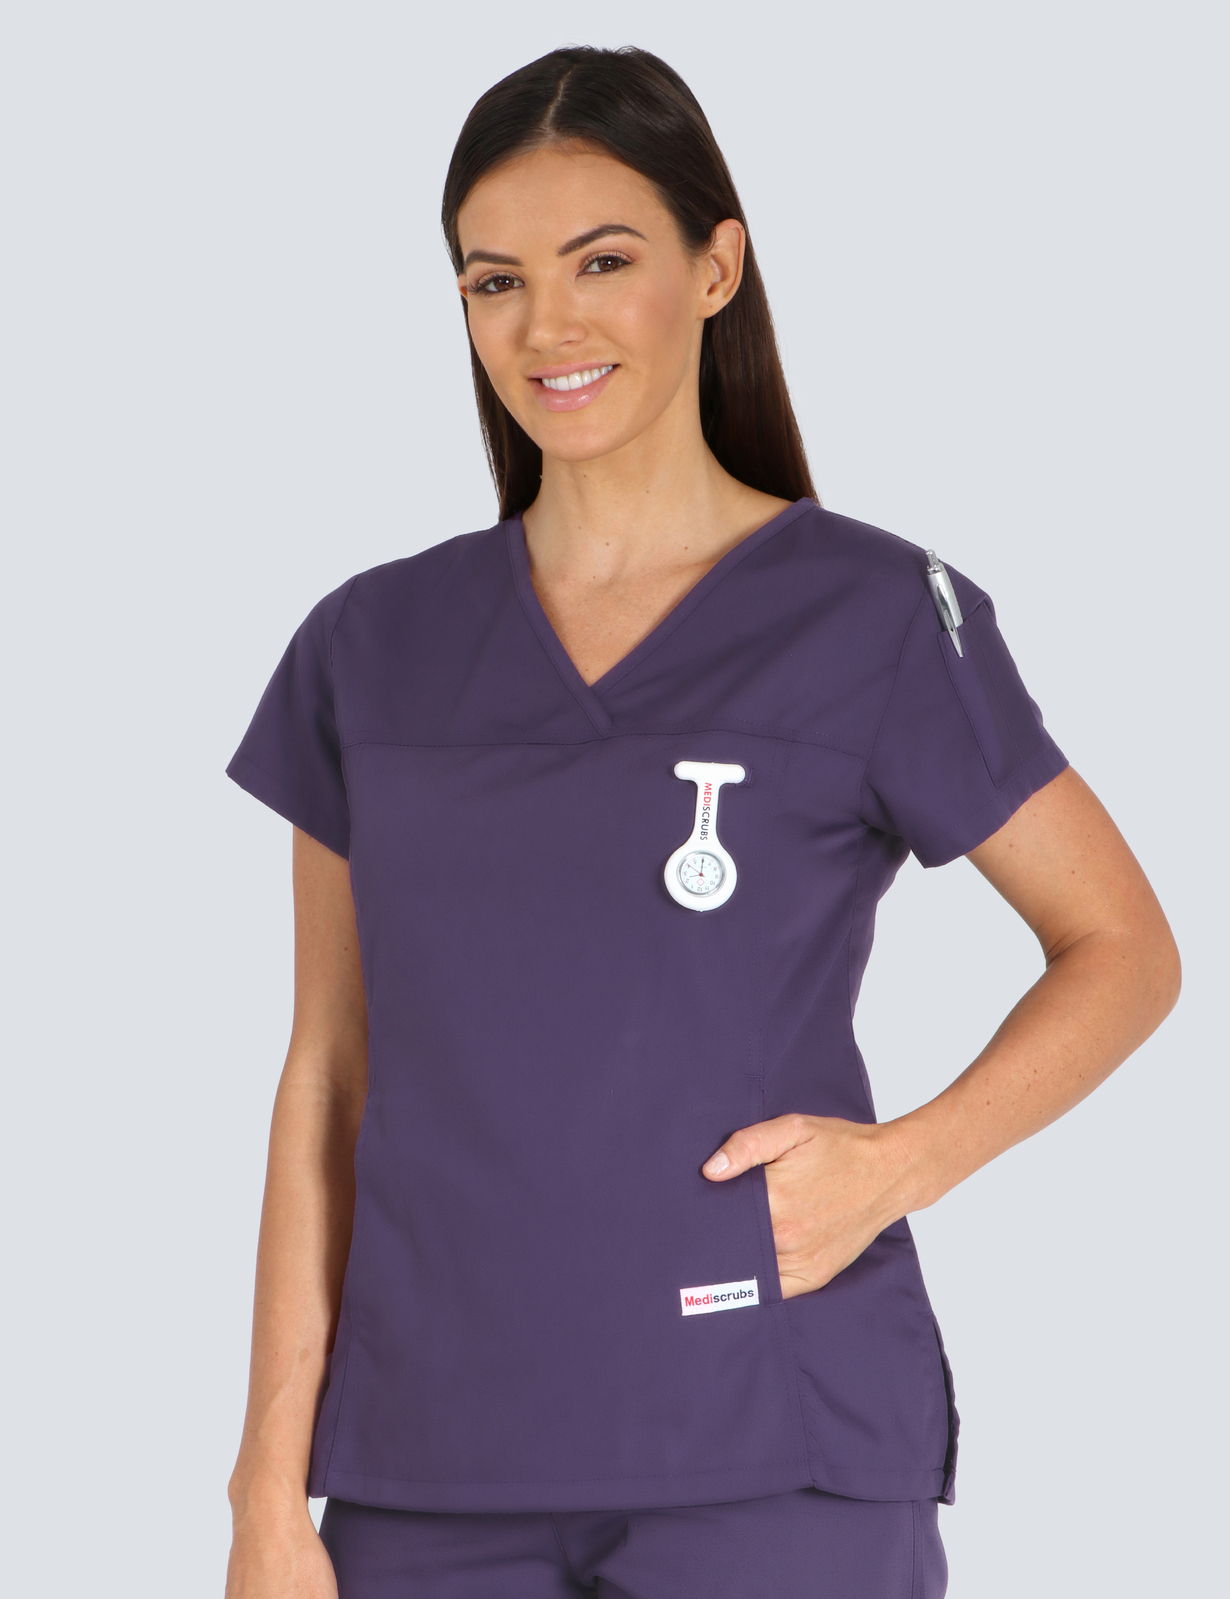 Redland Hospital Pharmacist Uniform Top Only Bundle (Women's Fit Solid Top + Logo) 